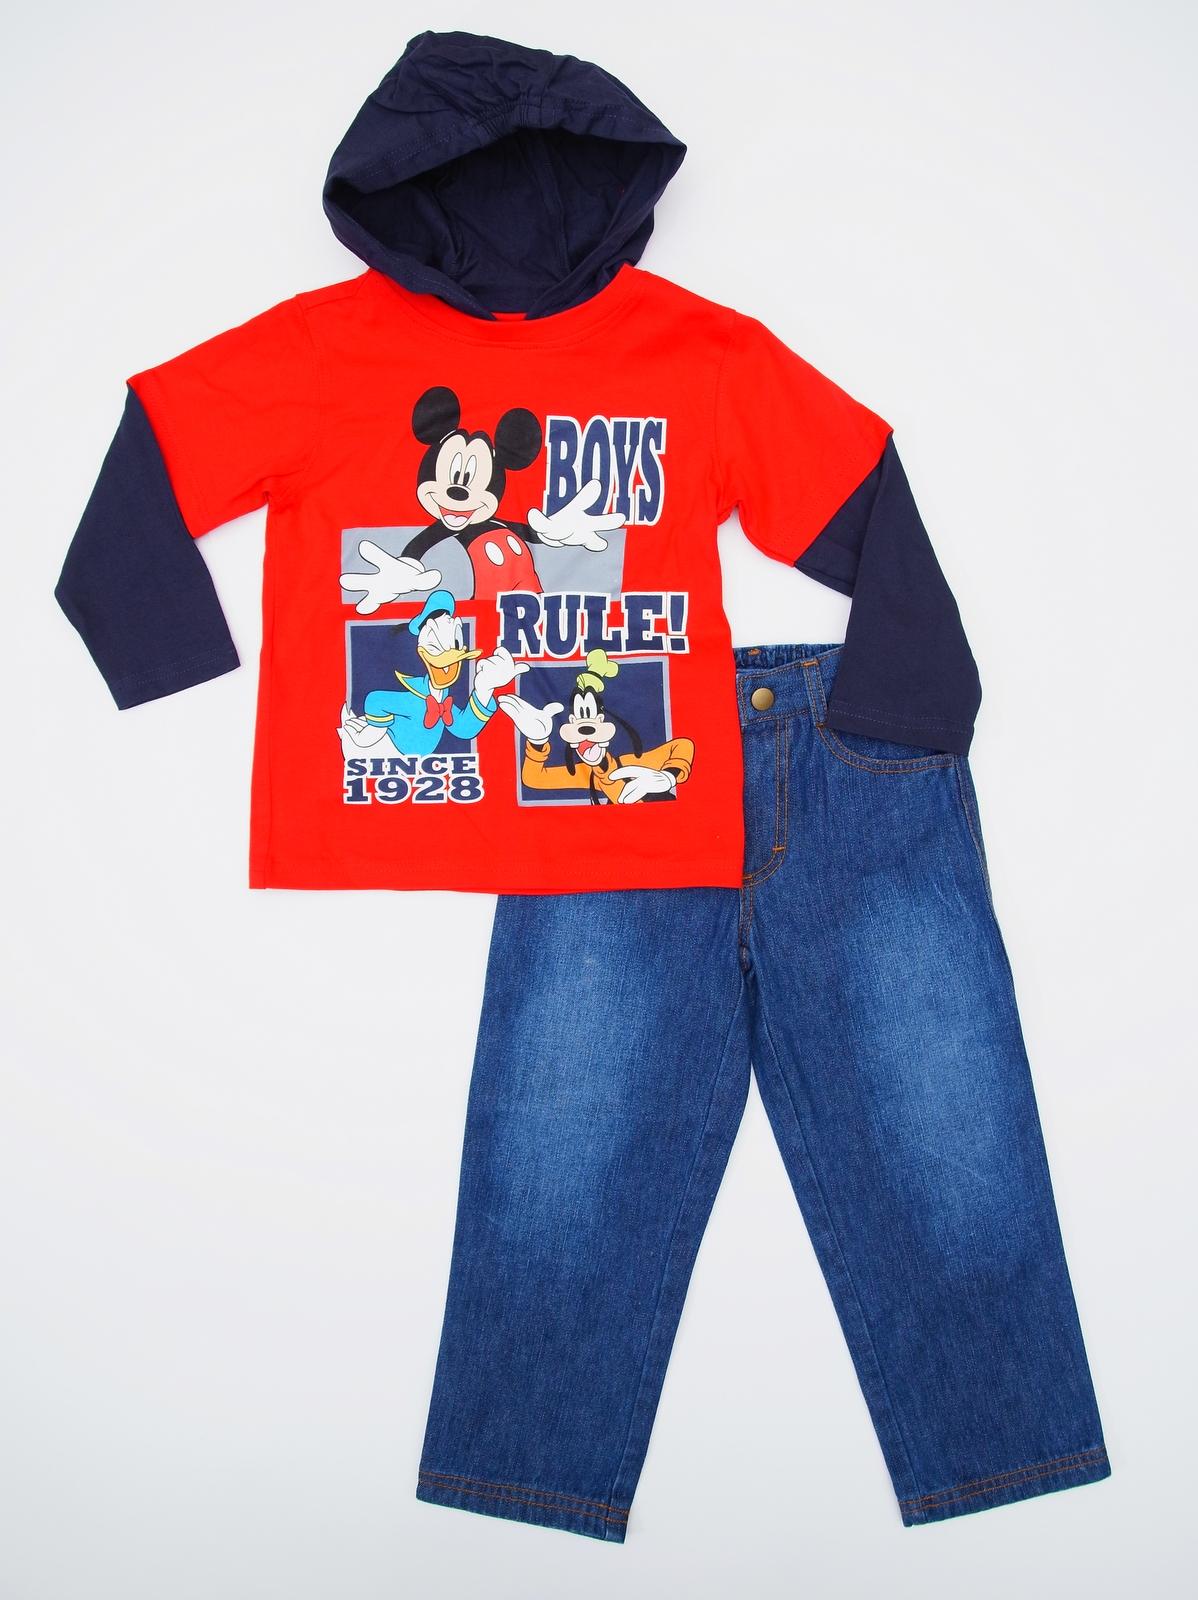 Disney Infant & Toddler Boy's Hooded Shirt & Jeans - Boy's Rule